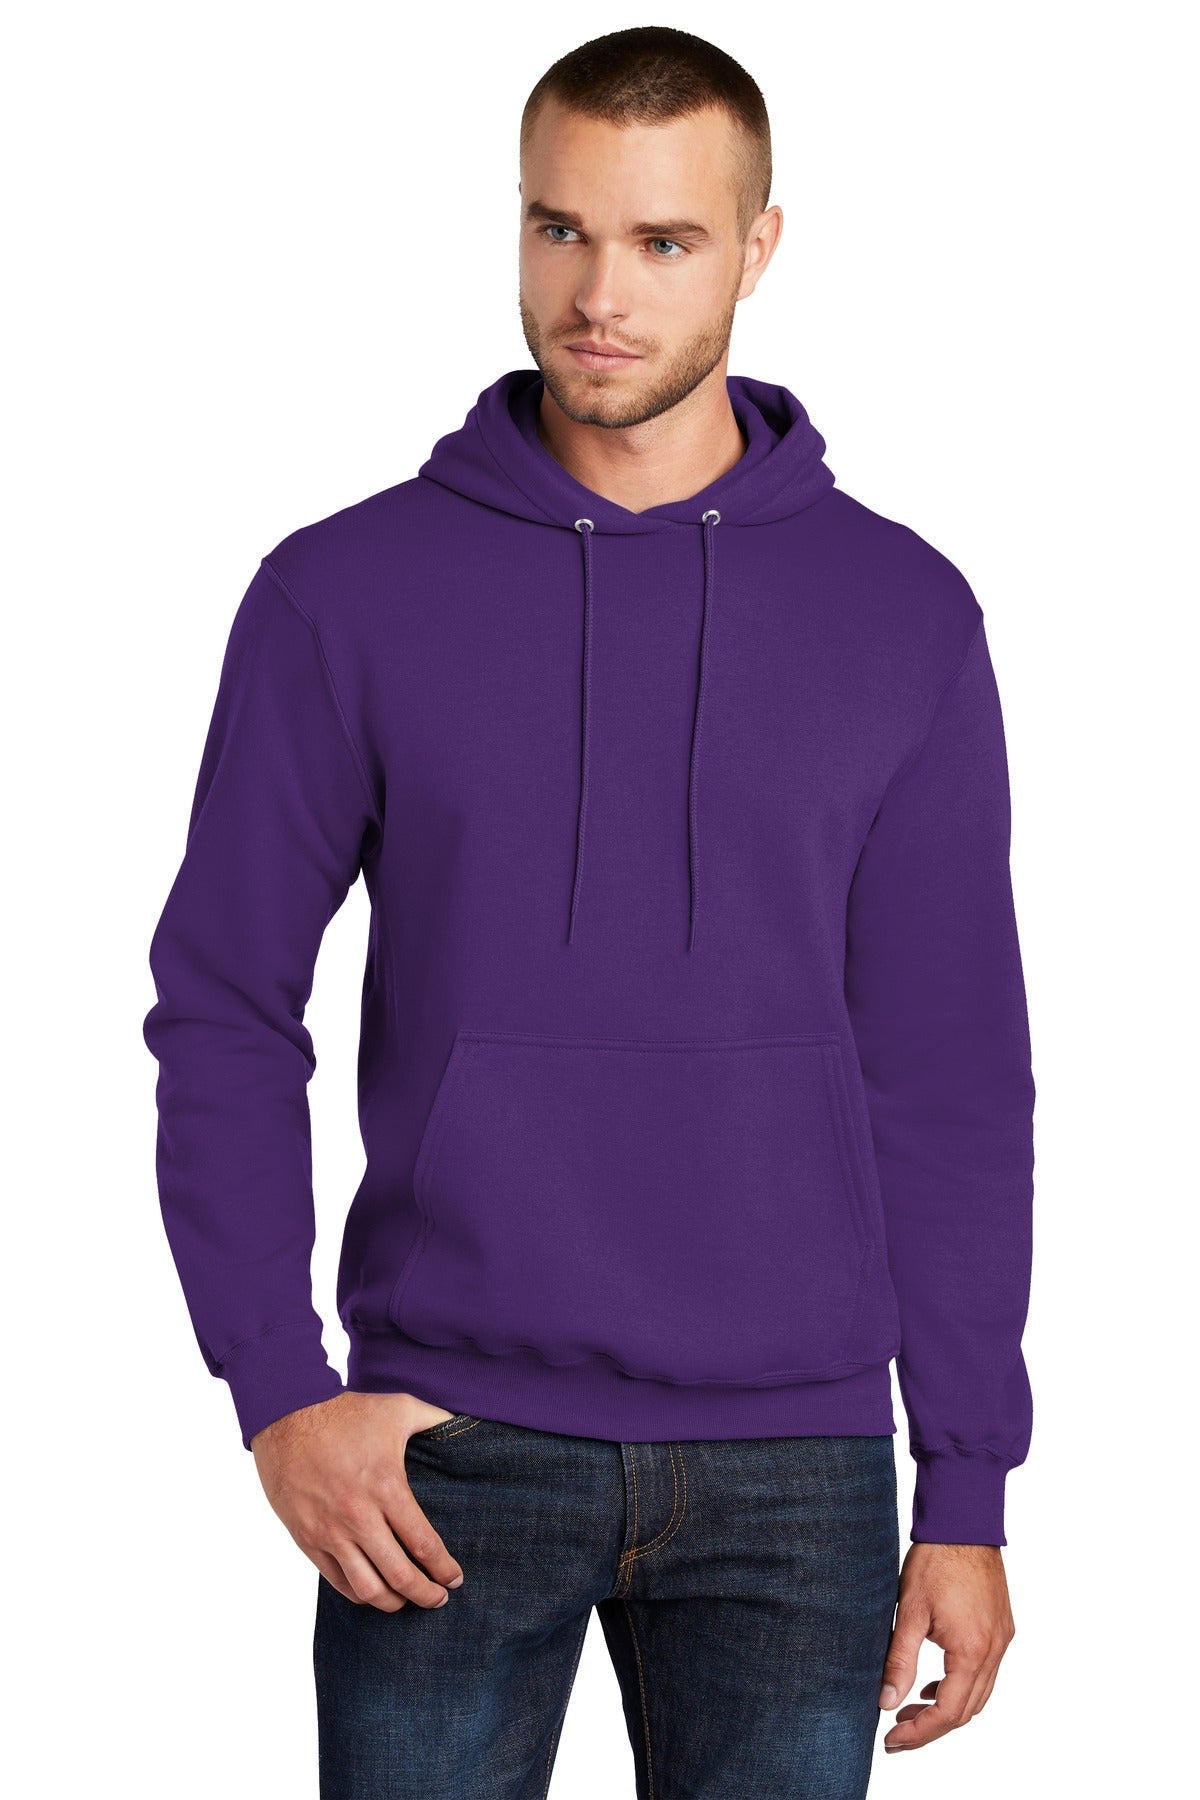 Port & Company® - Core Fleece Pullover Hooded Sweatshirt. PC78H [Team Purple] - DFW Impression